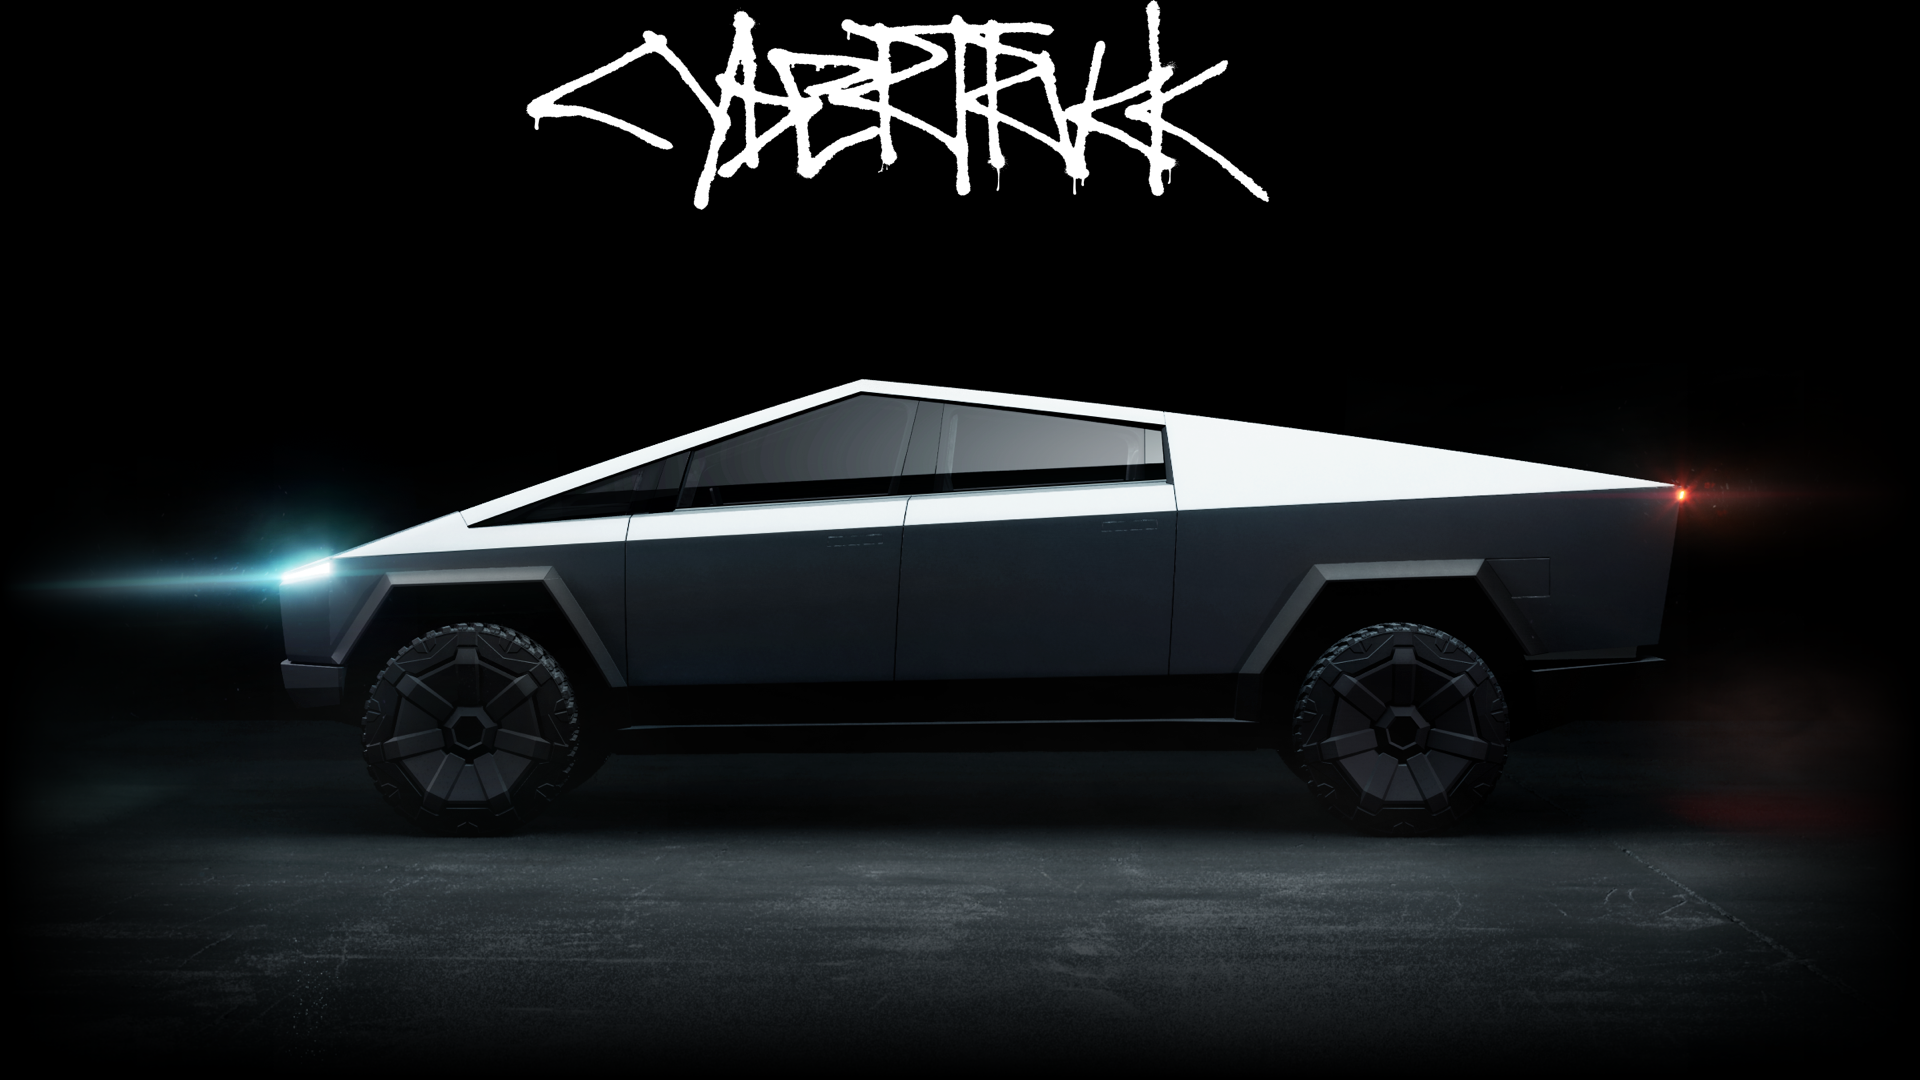 The Tesla Cybertruck features a futuristic design – and futuristic specs